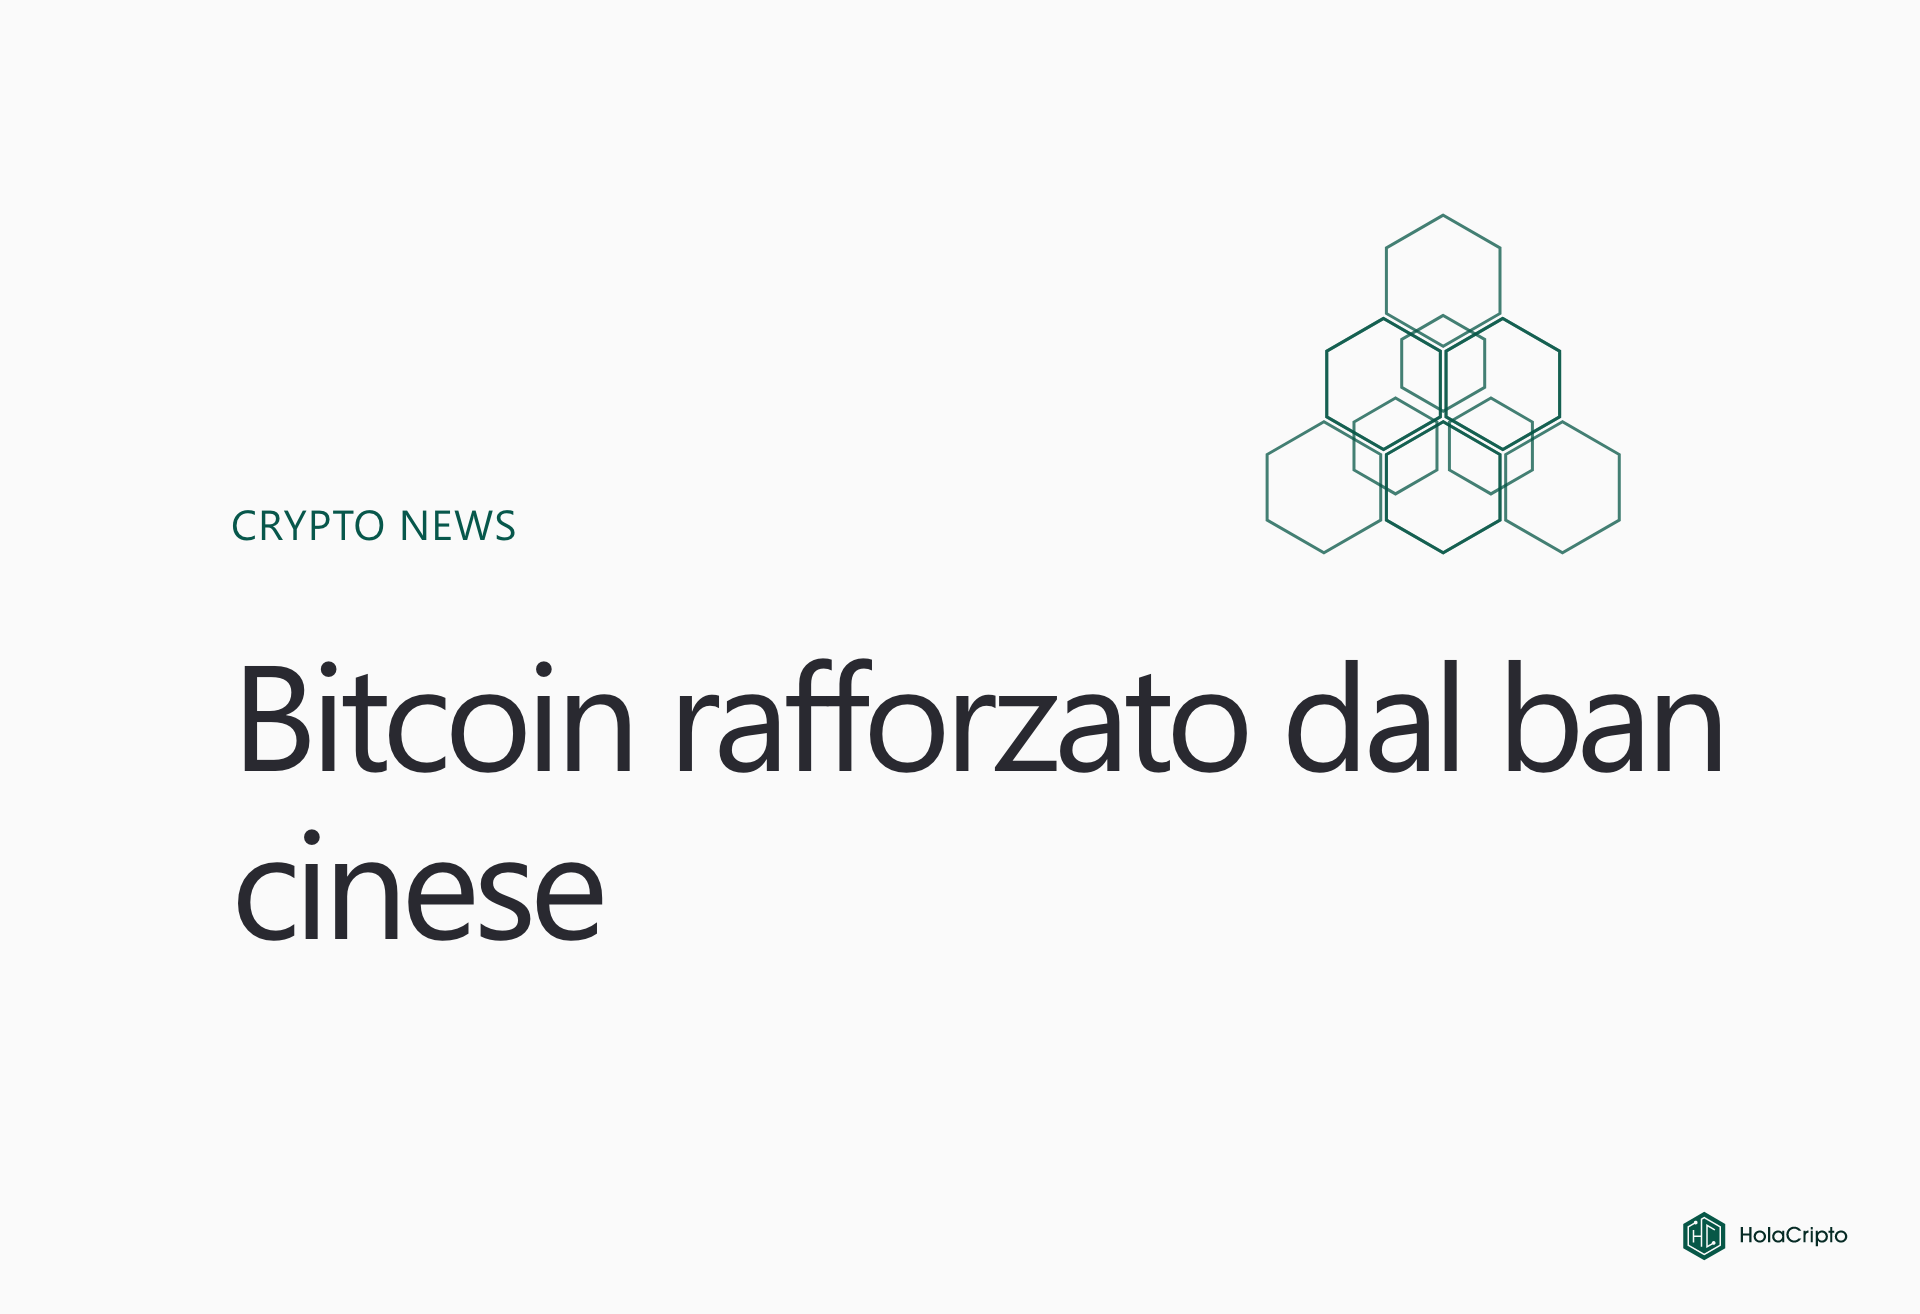 Bitcoin rafforzato dal ban cinese